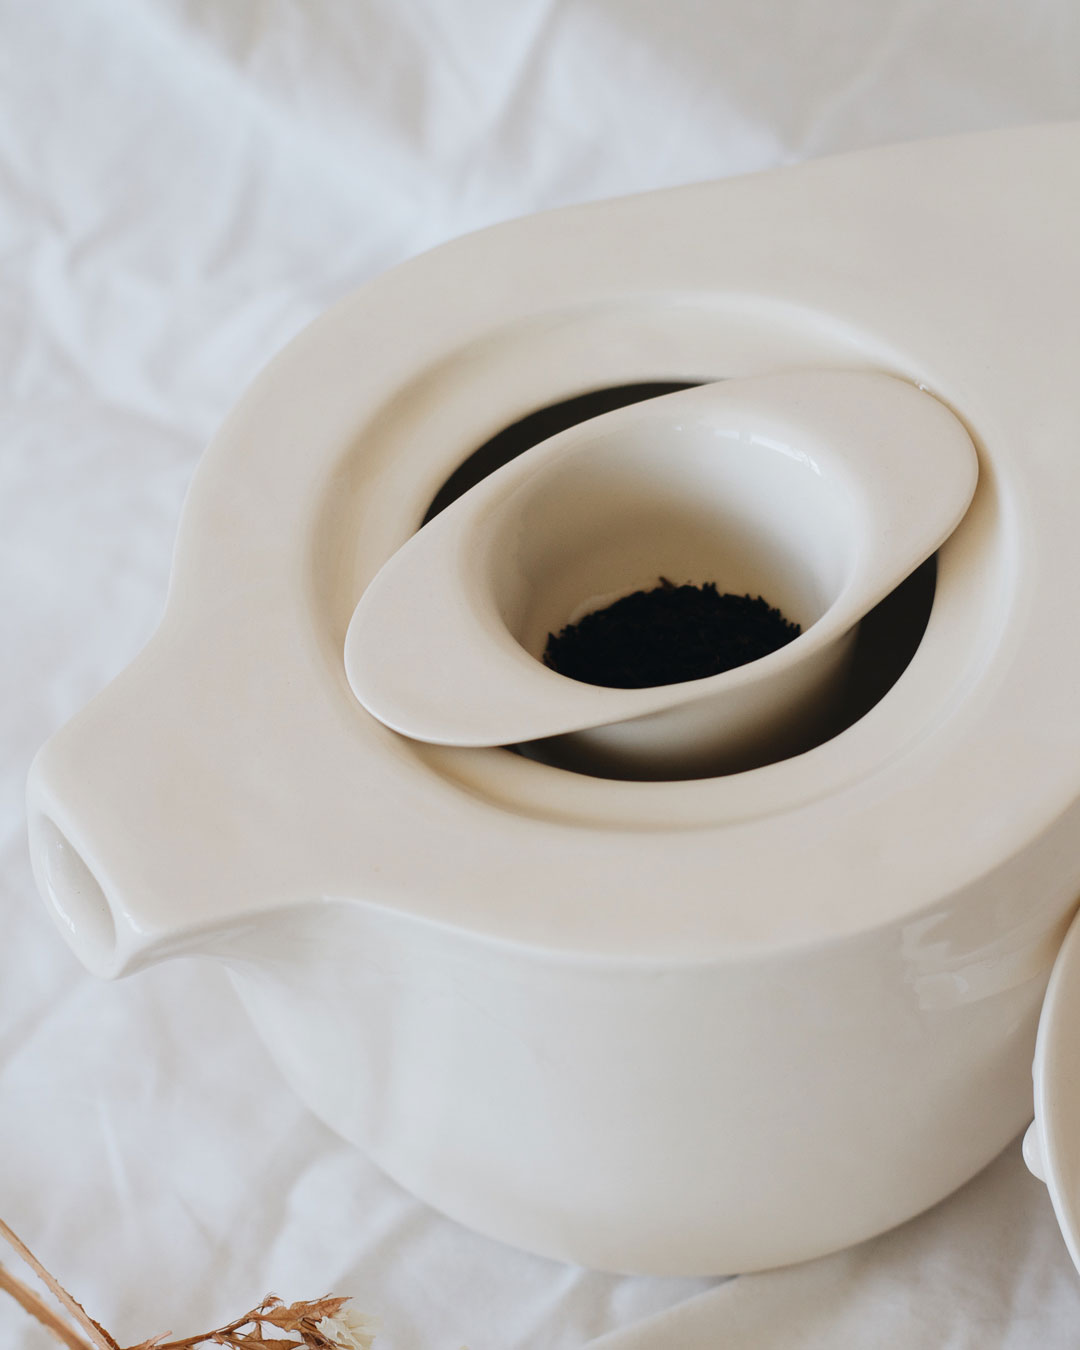 Ameno Tea Pot with Strainer_pottery_nu ceramica